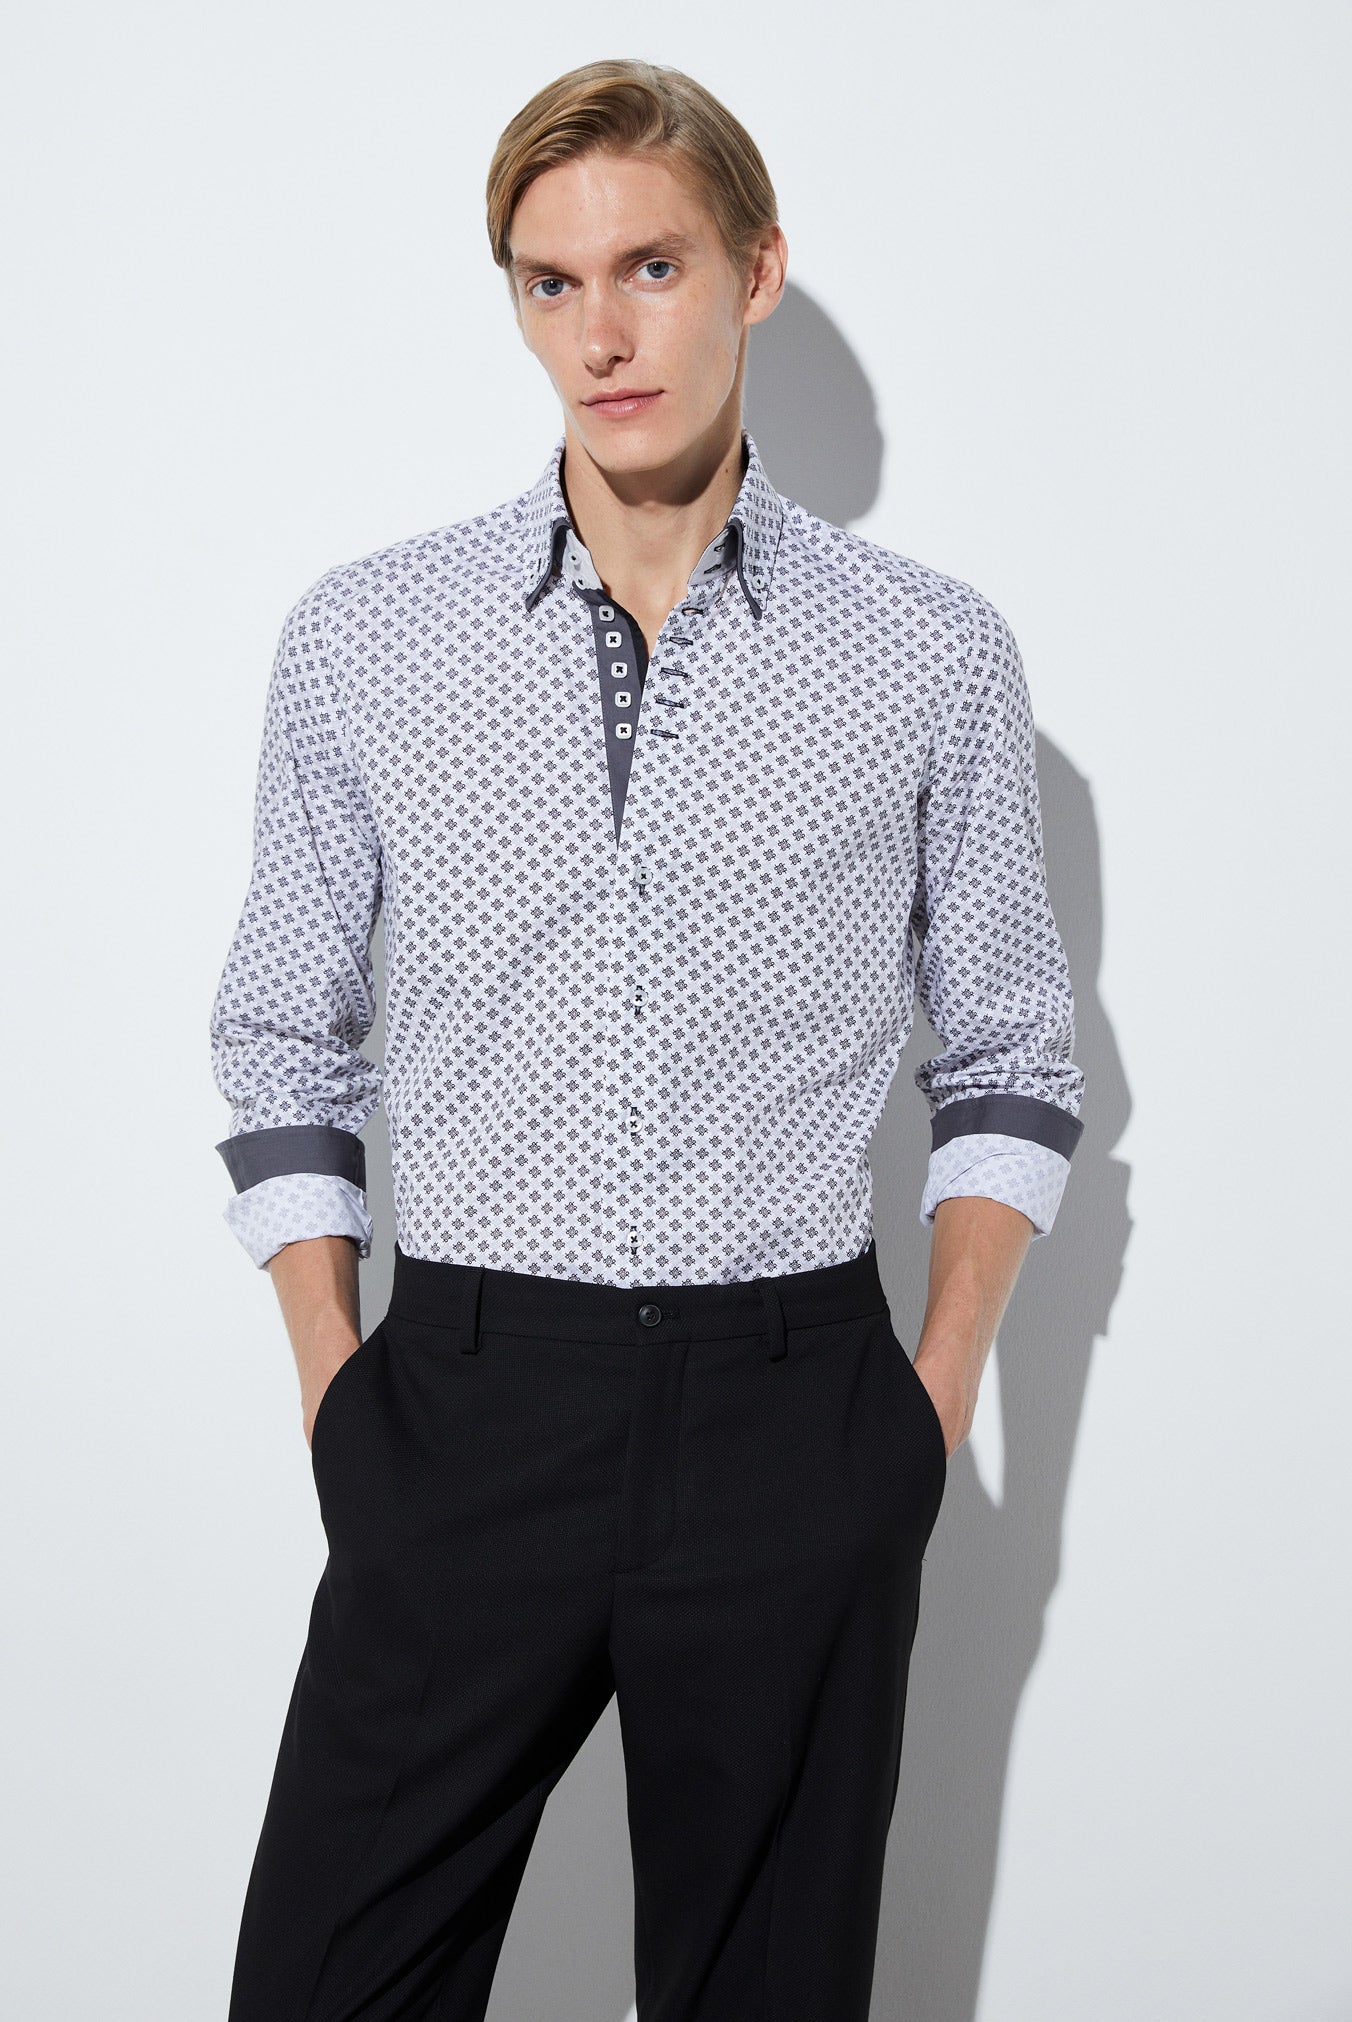 Easy-iron Shirt - Black/patterned - Men